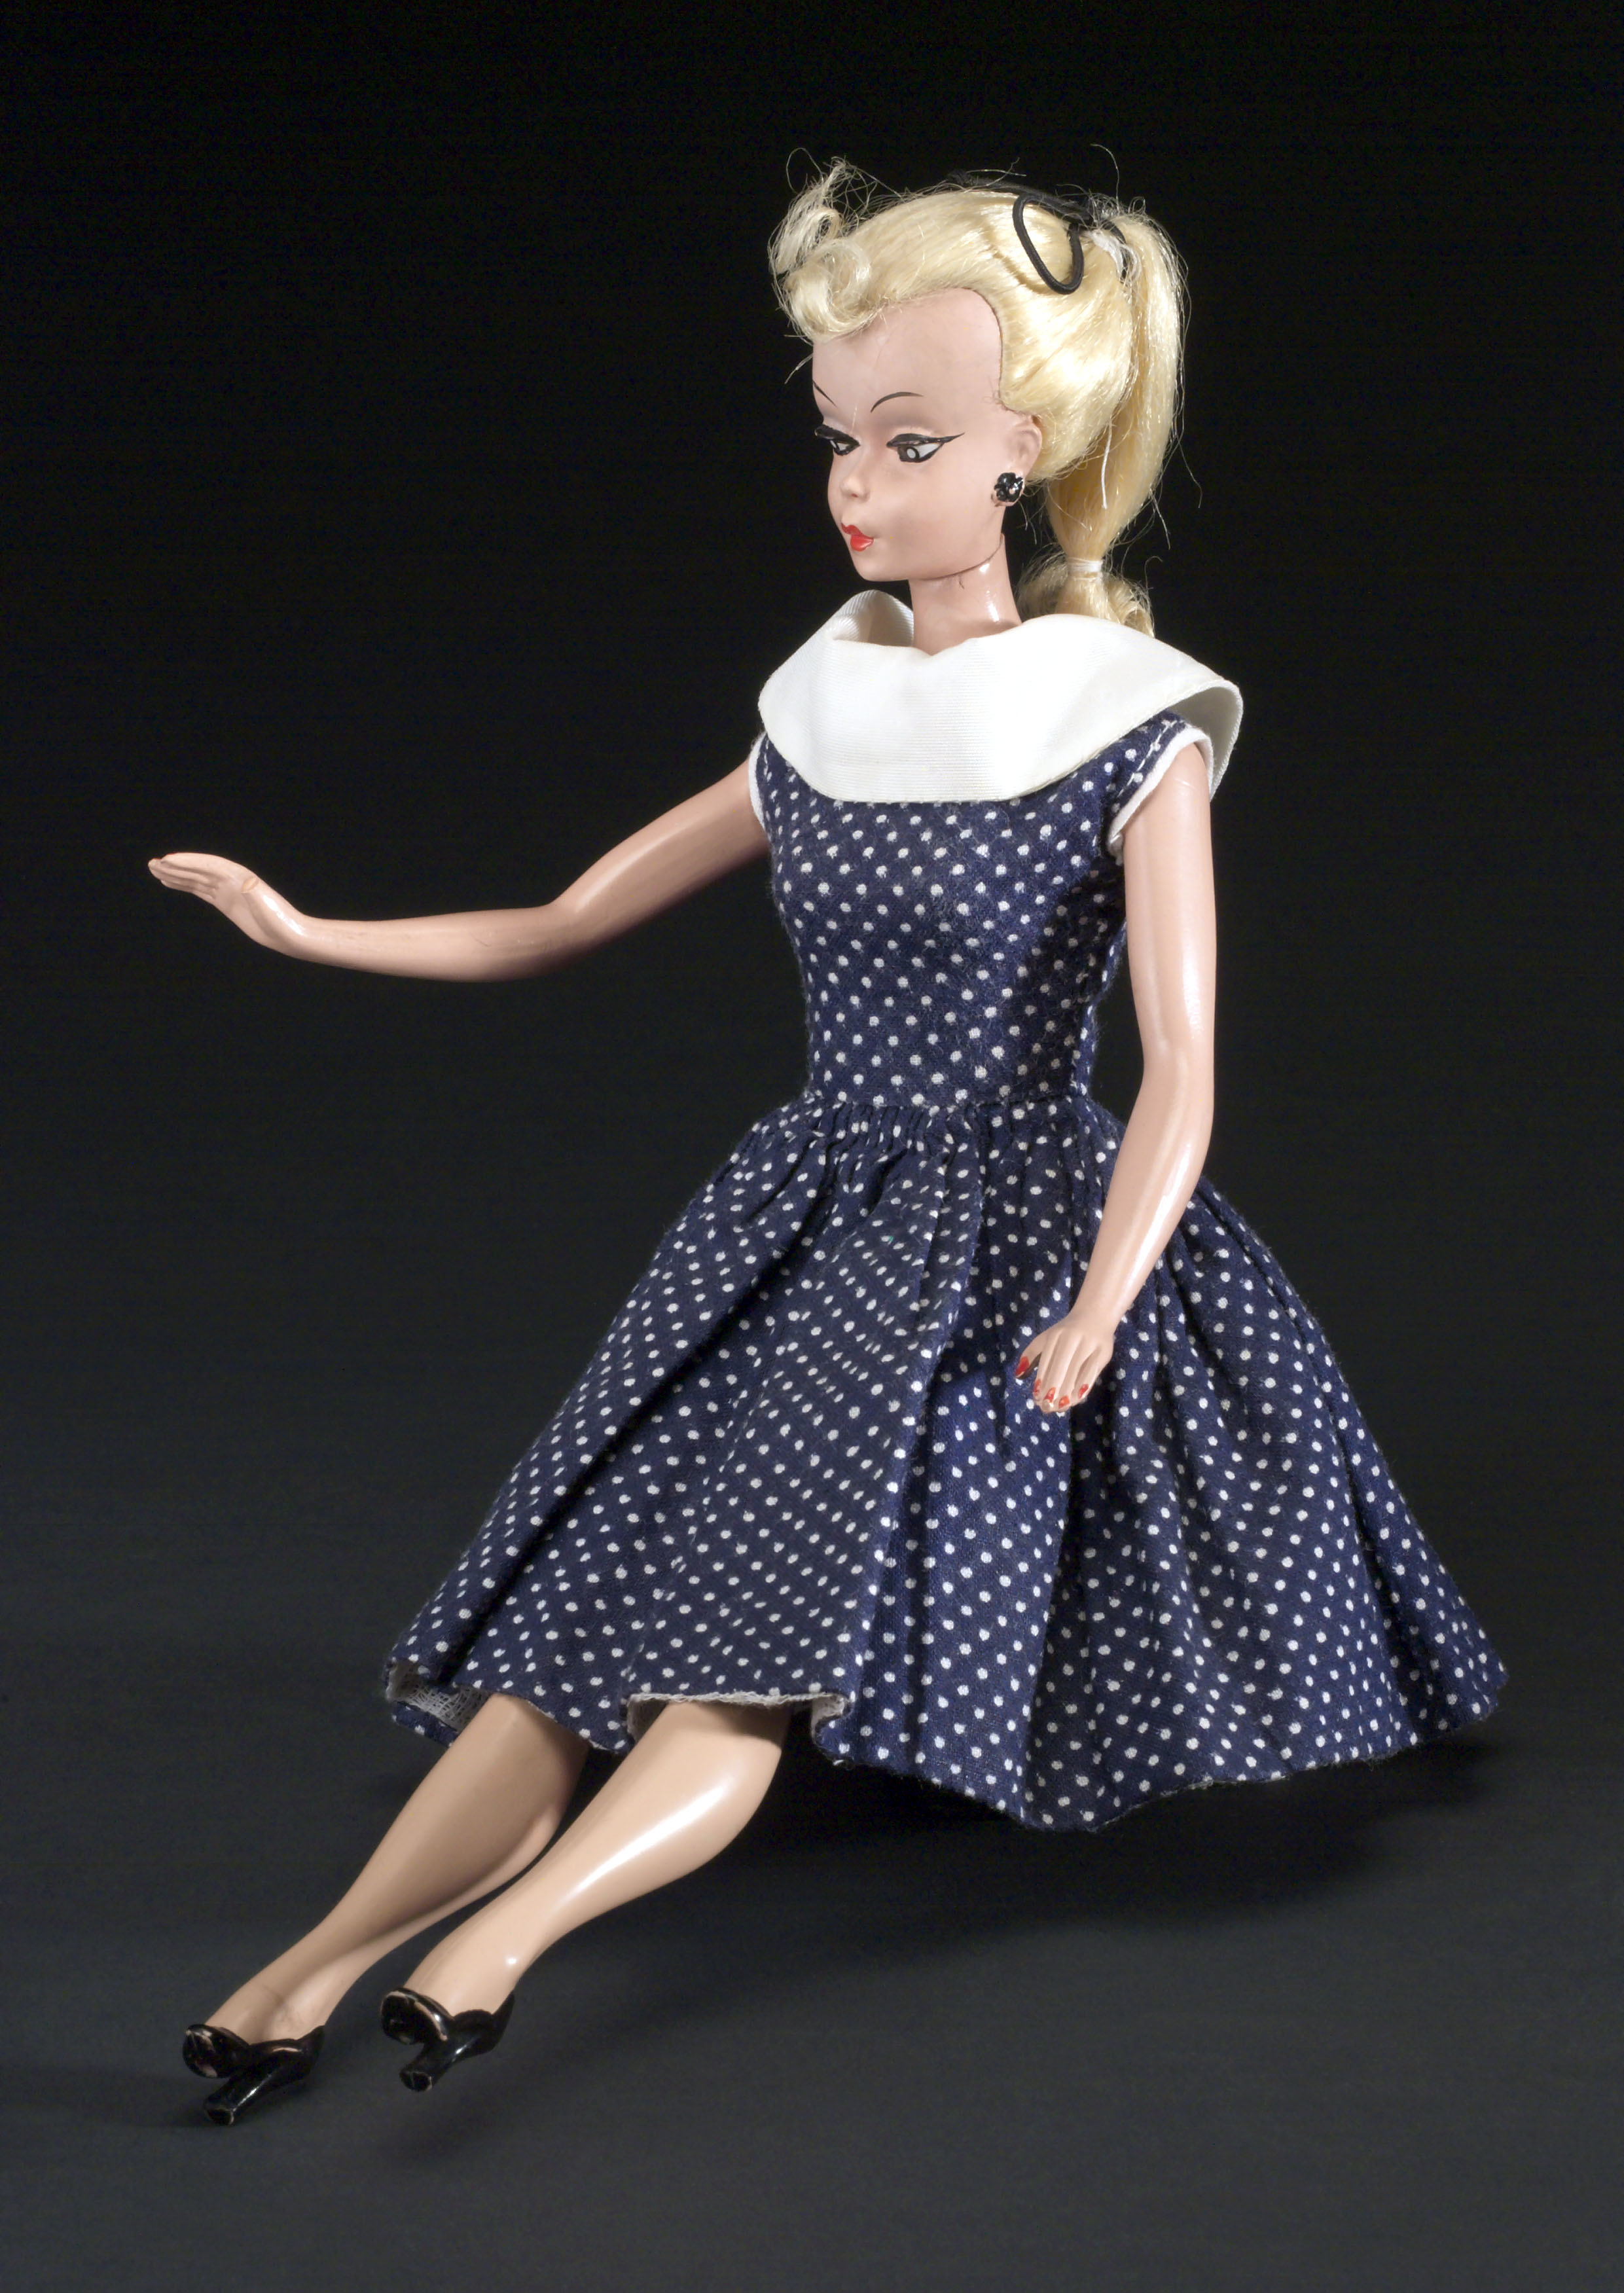 doll in a polka dot dress